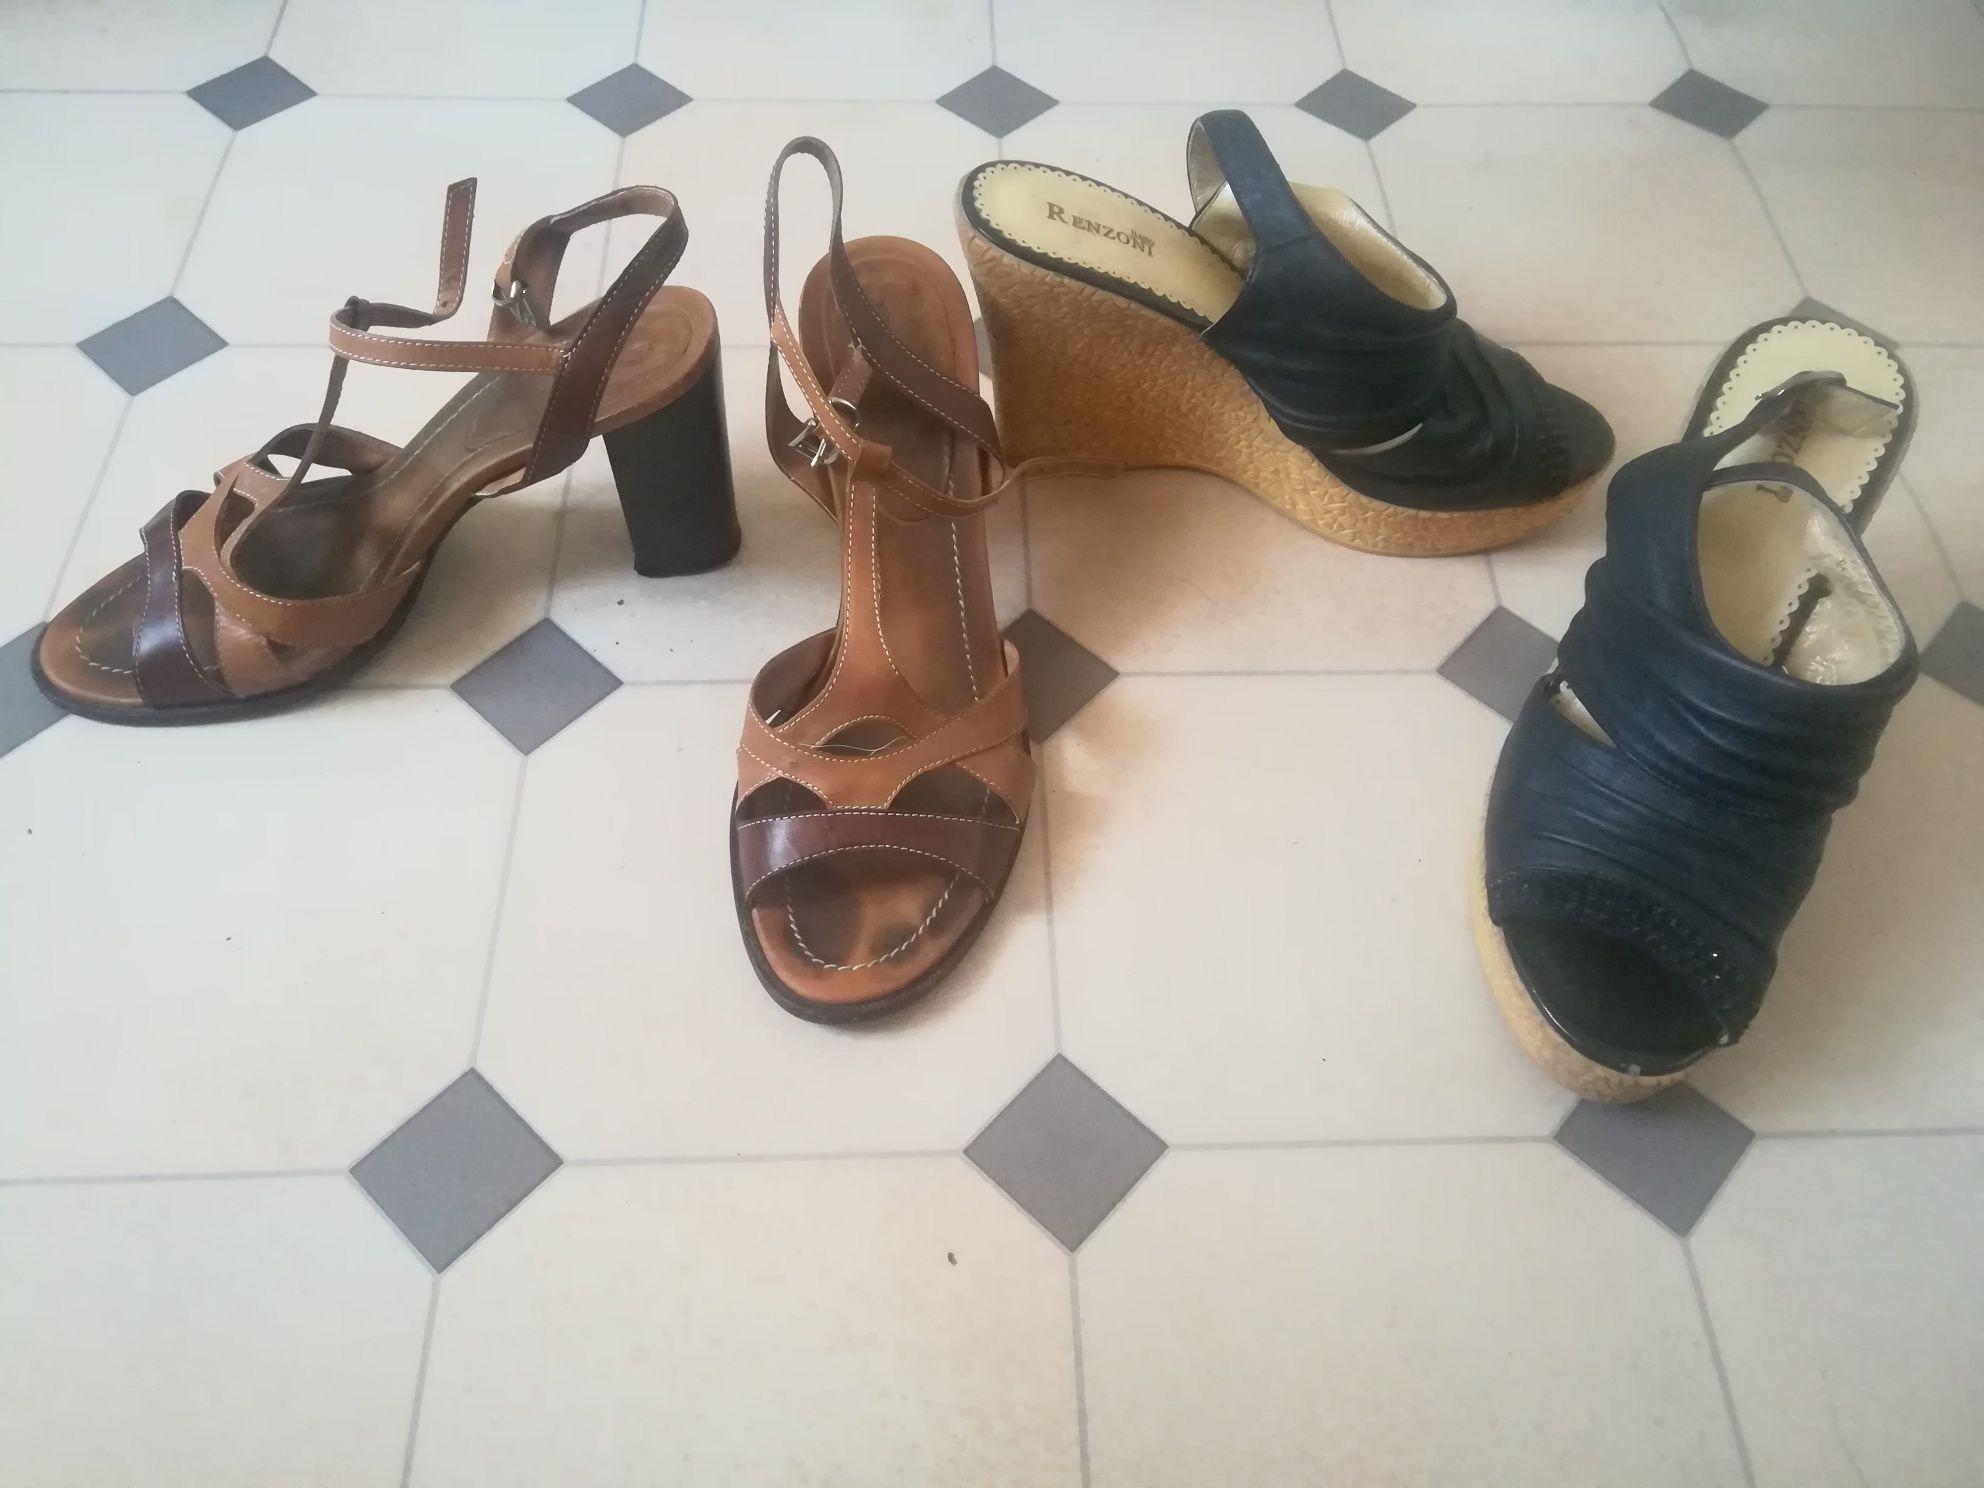 Обувь - туфли, босоножки, балетки, мокасины 39, 40,41 размер